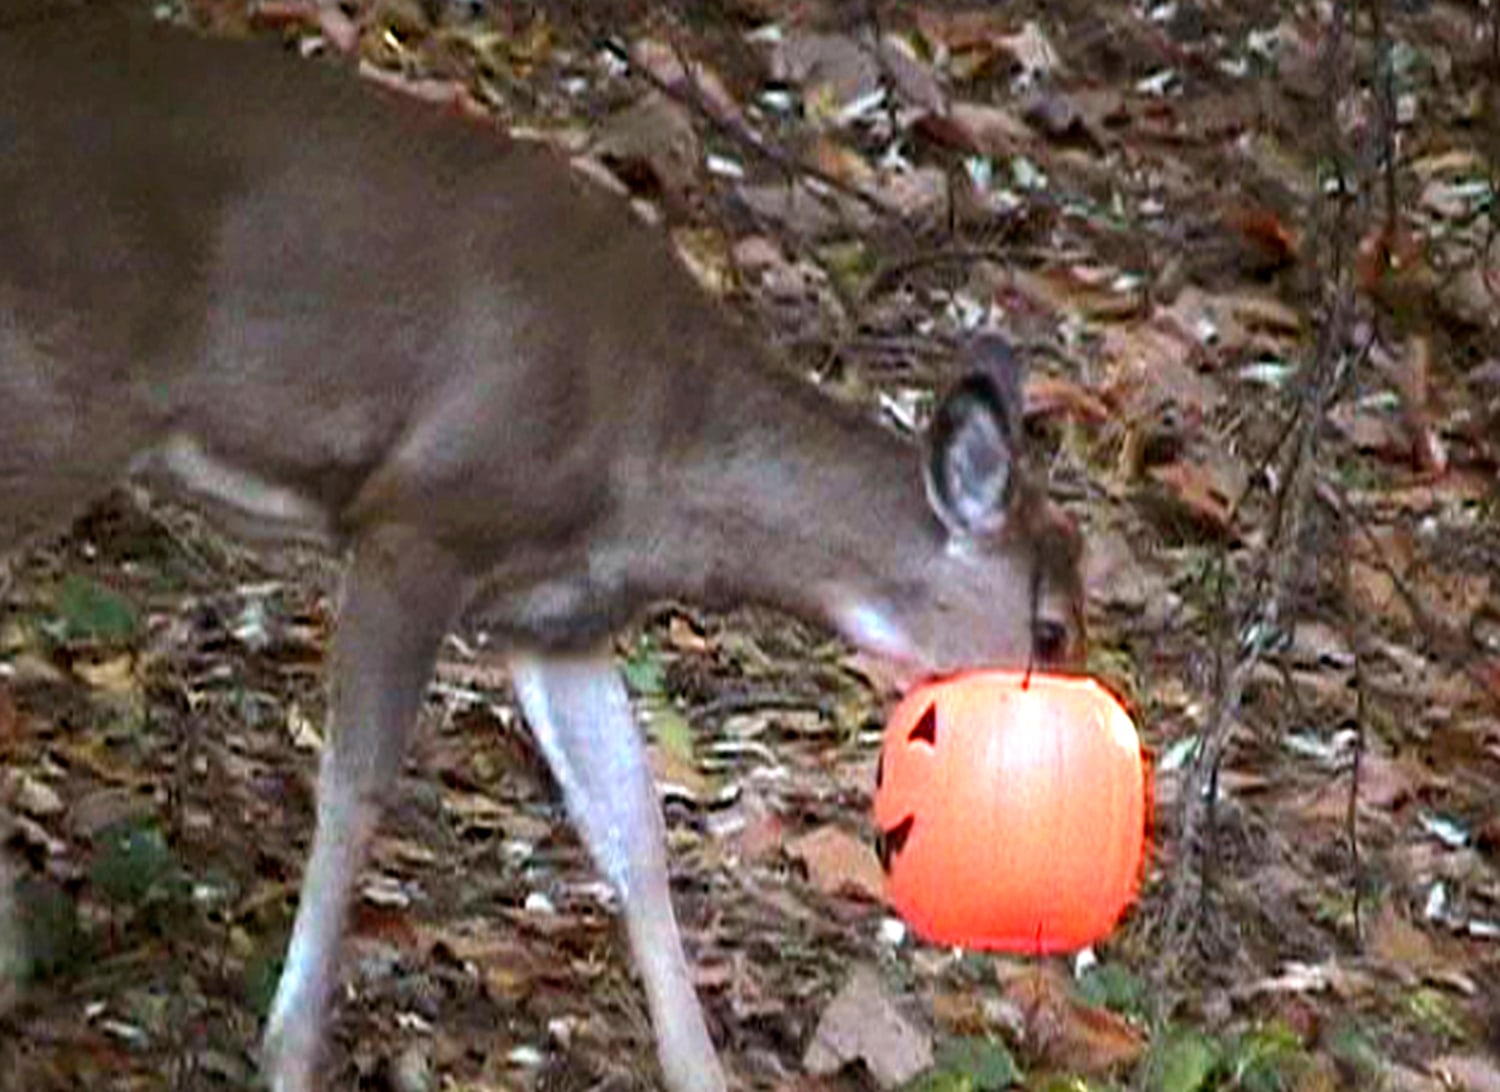 Wild deer escapes troublesome plastic pumpkin